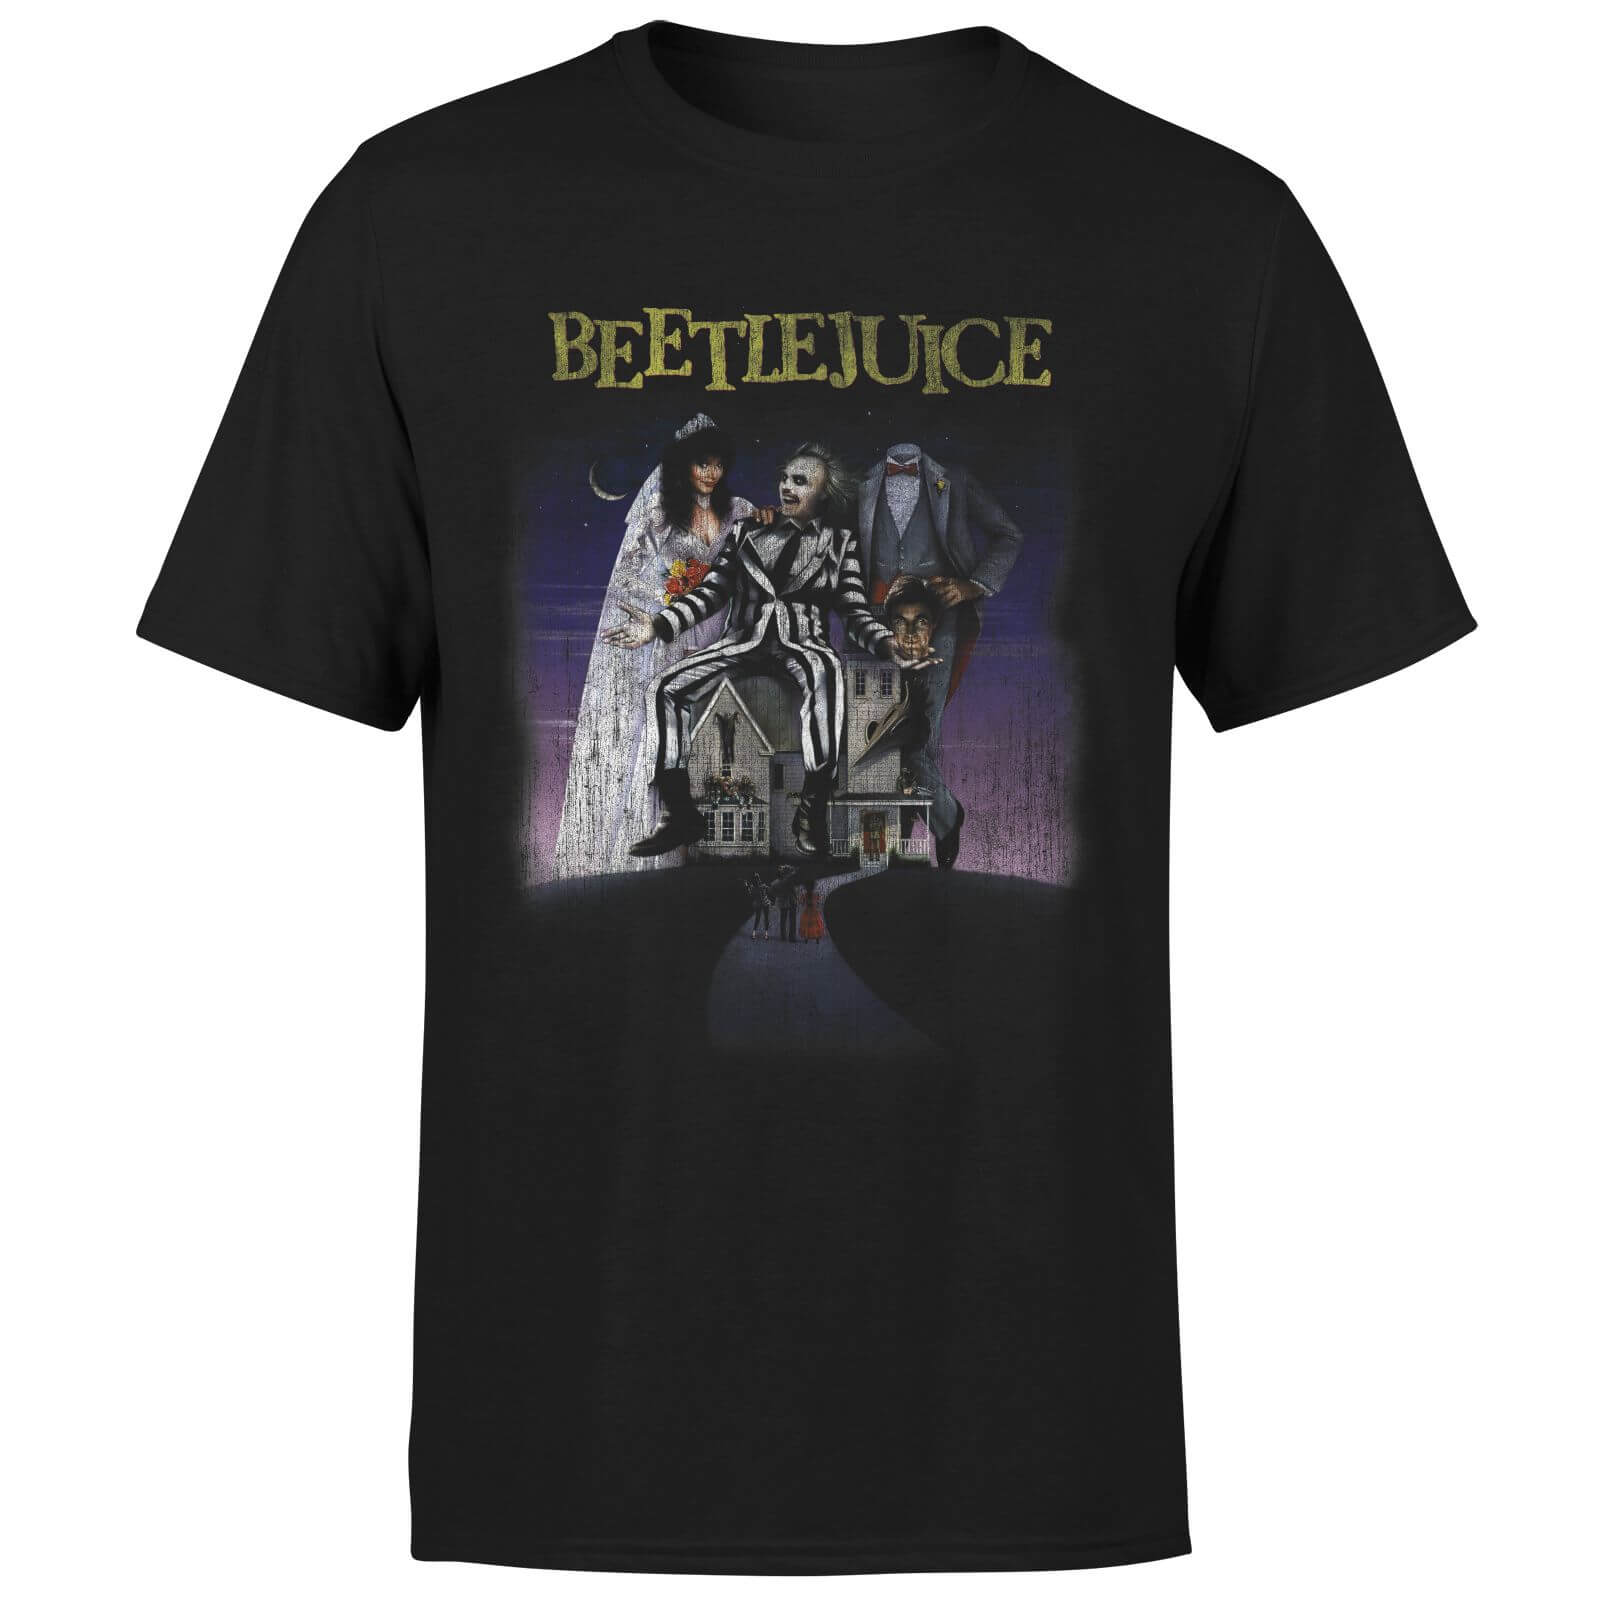 Beetlejuice Distressed Poster T-Shirt - Black - M